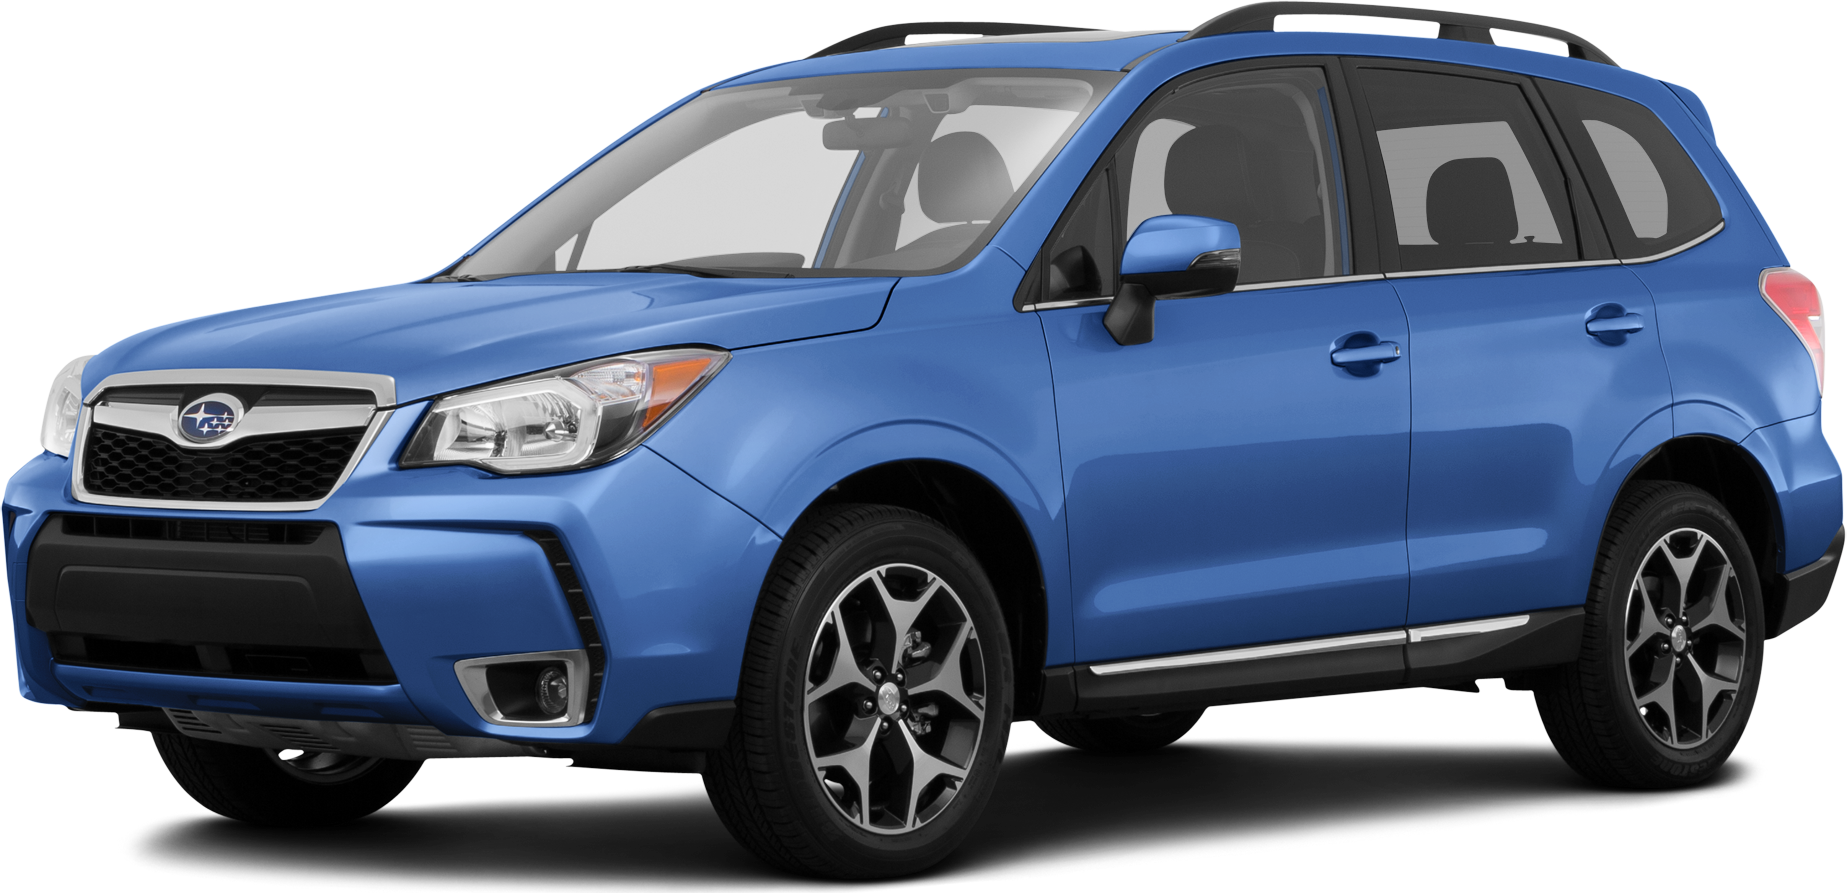 2016 Subaru Forester Price, Value, Ratings & Reviews